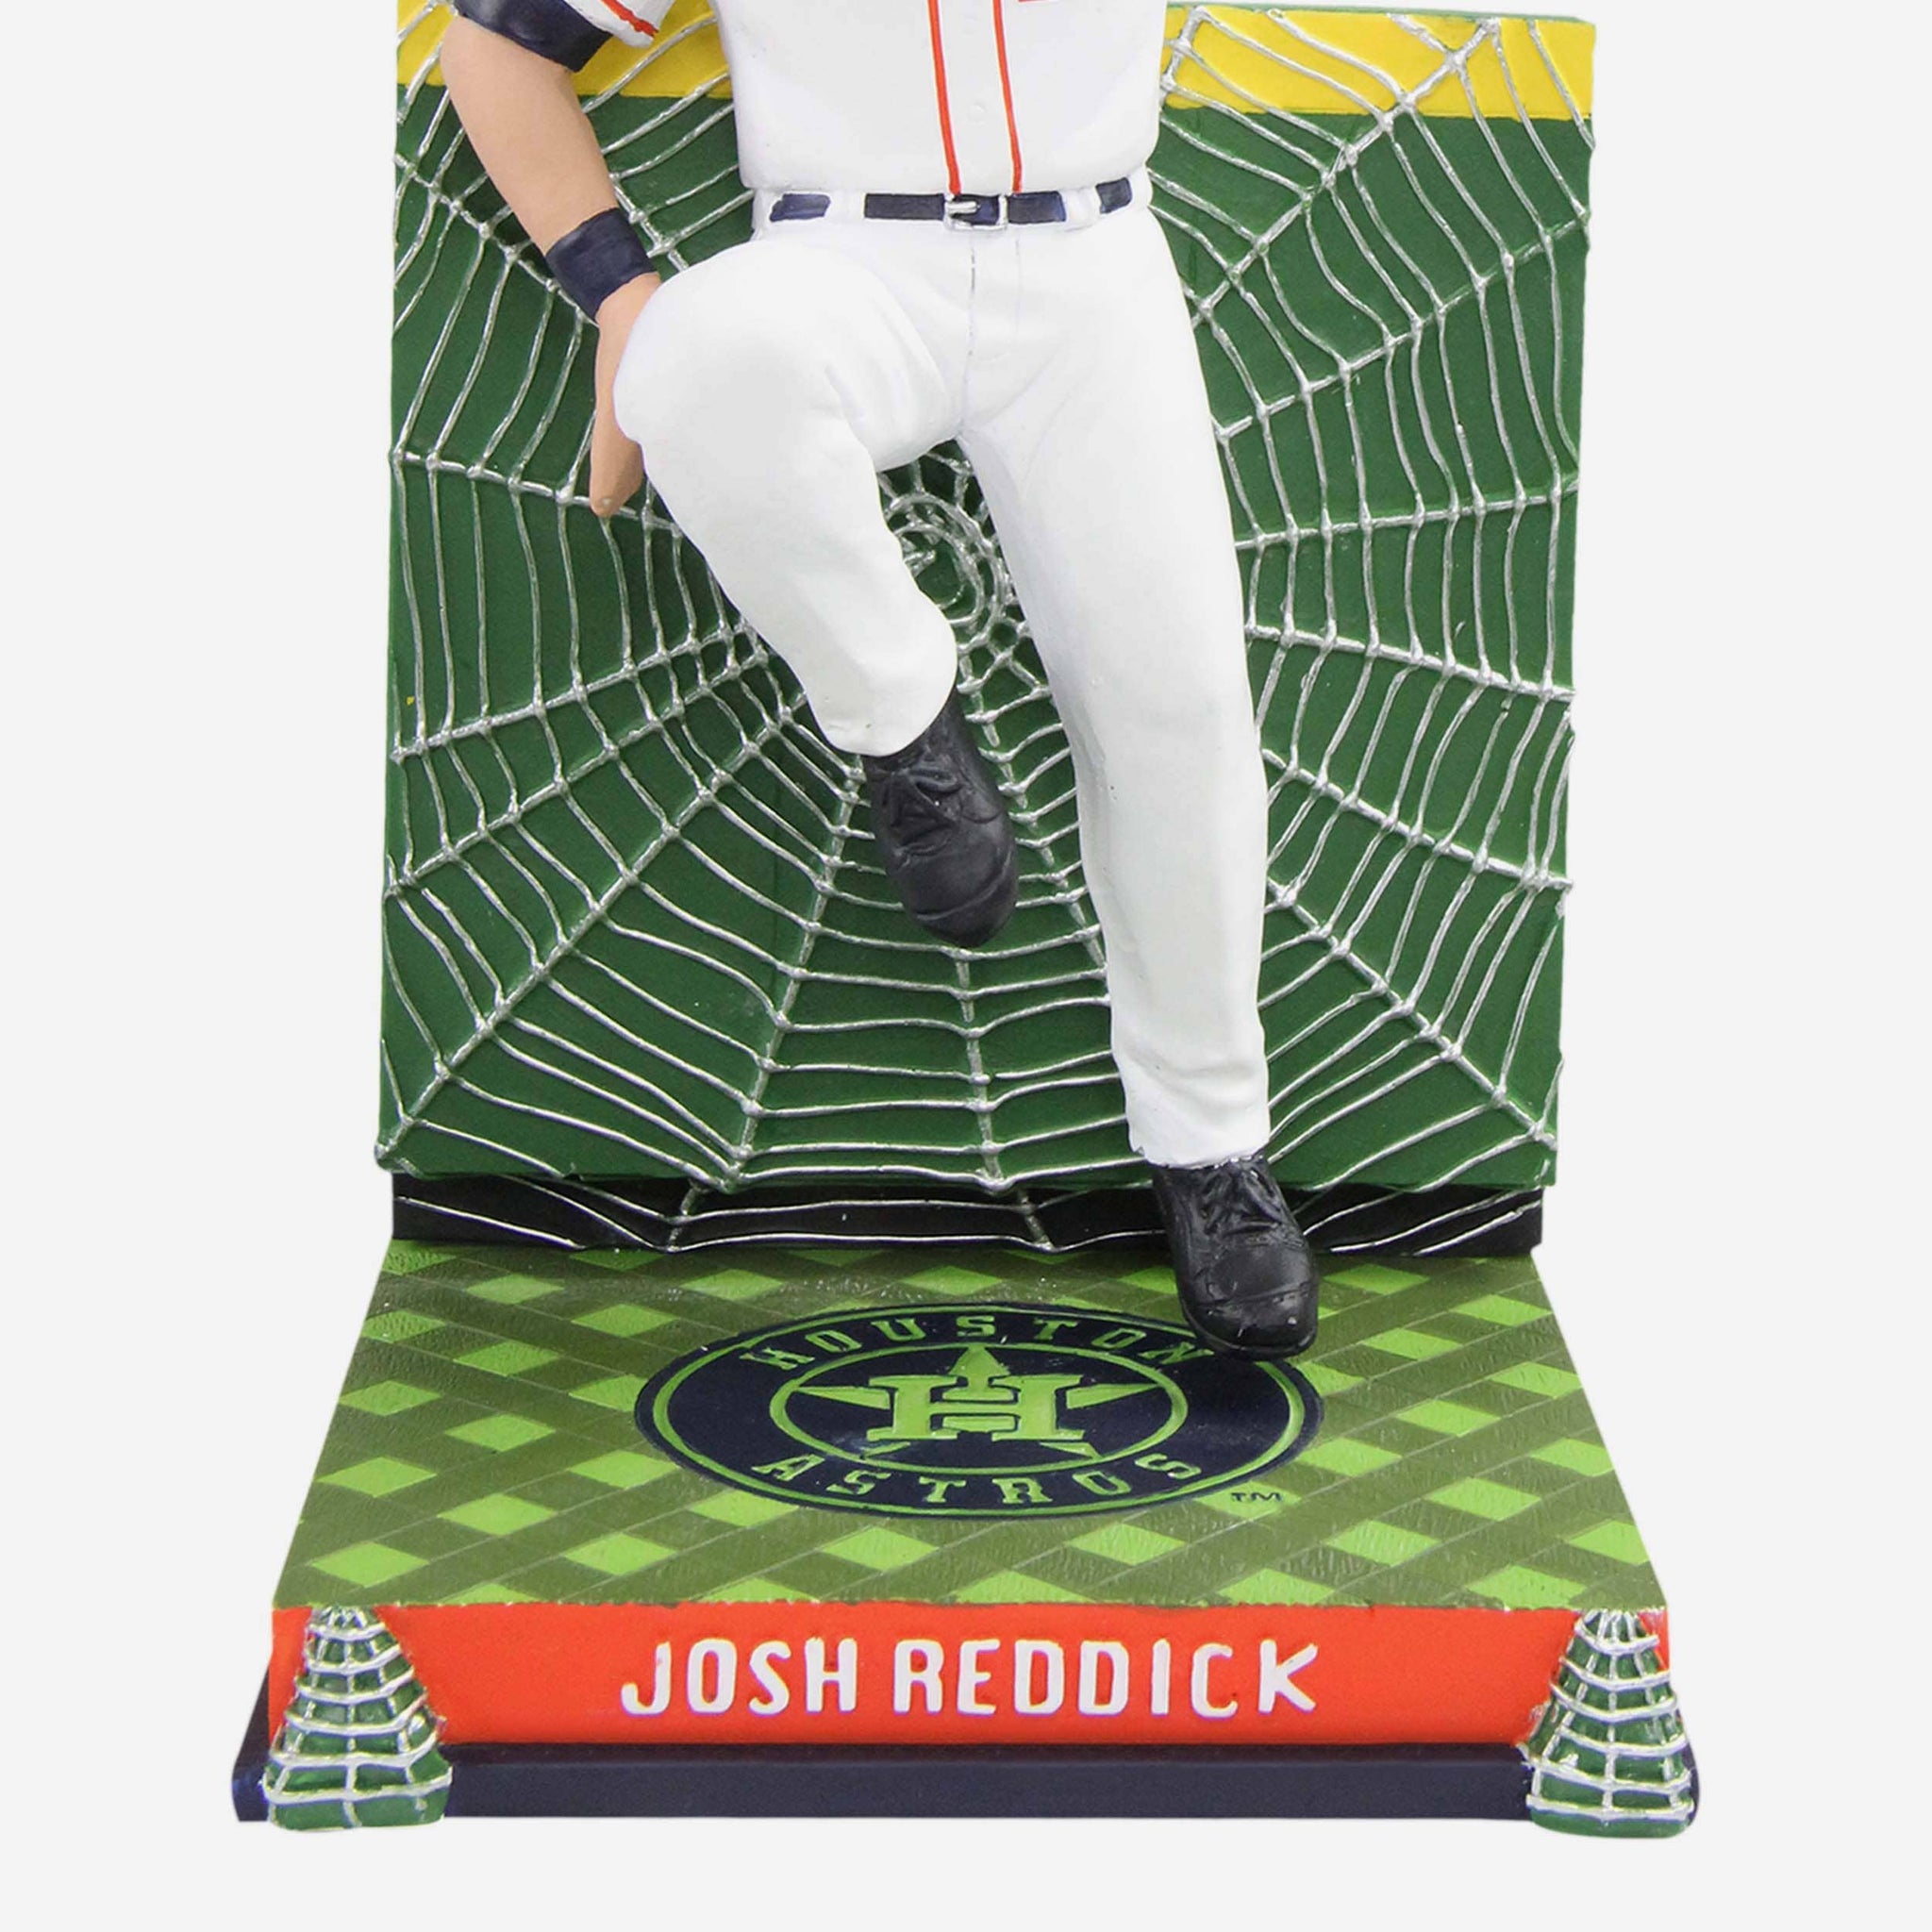 Josh Reddick Houston Astros Super Reddick Bobblehead FOCO